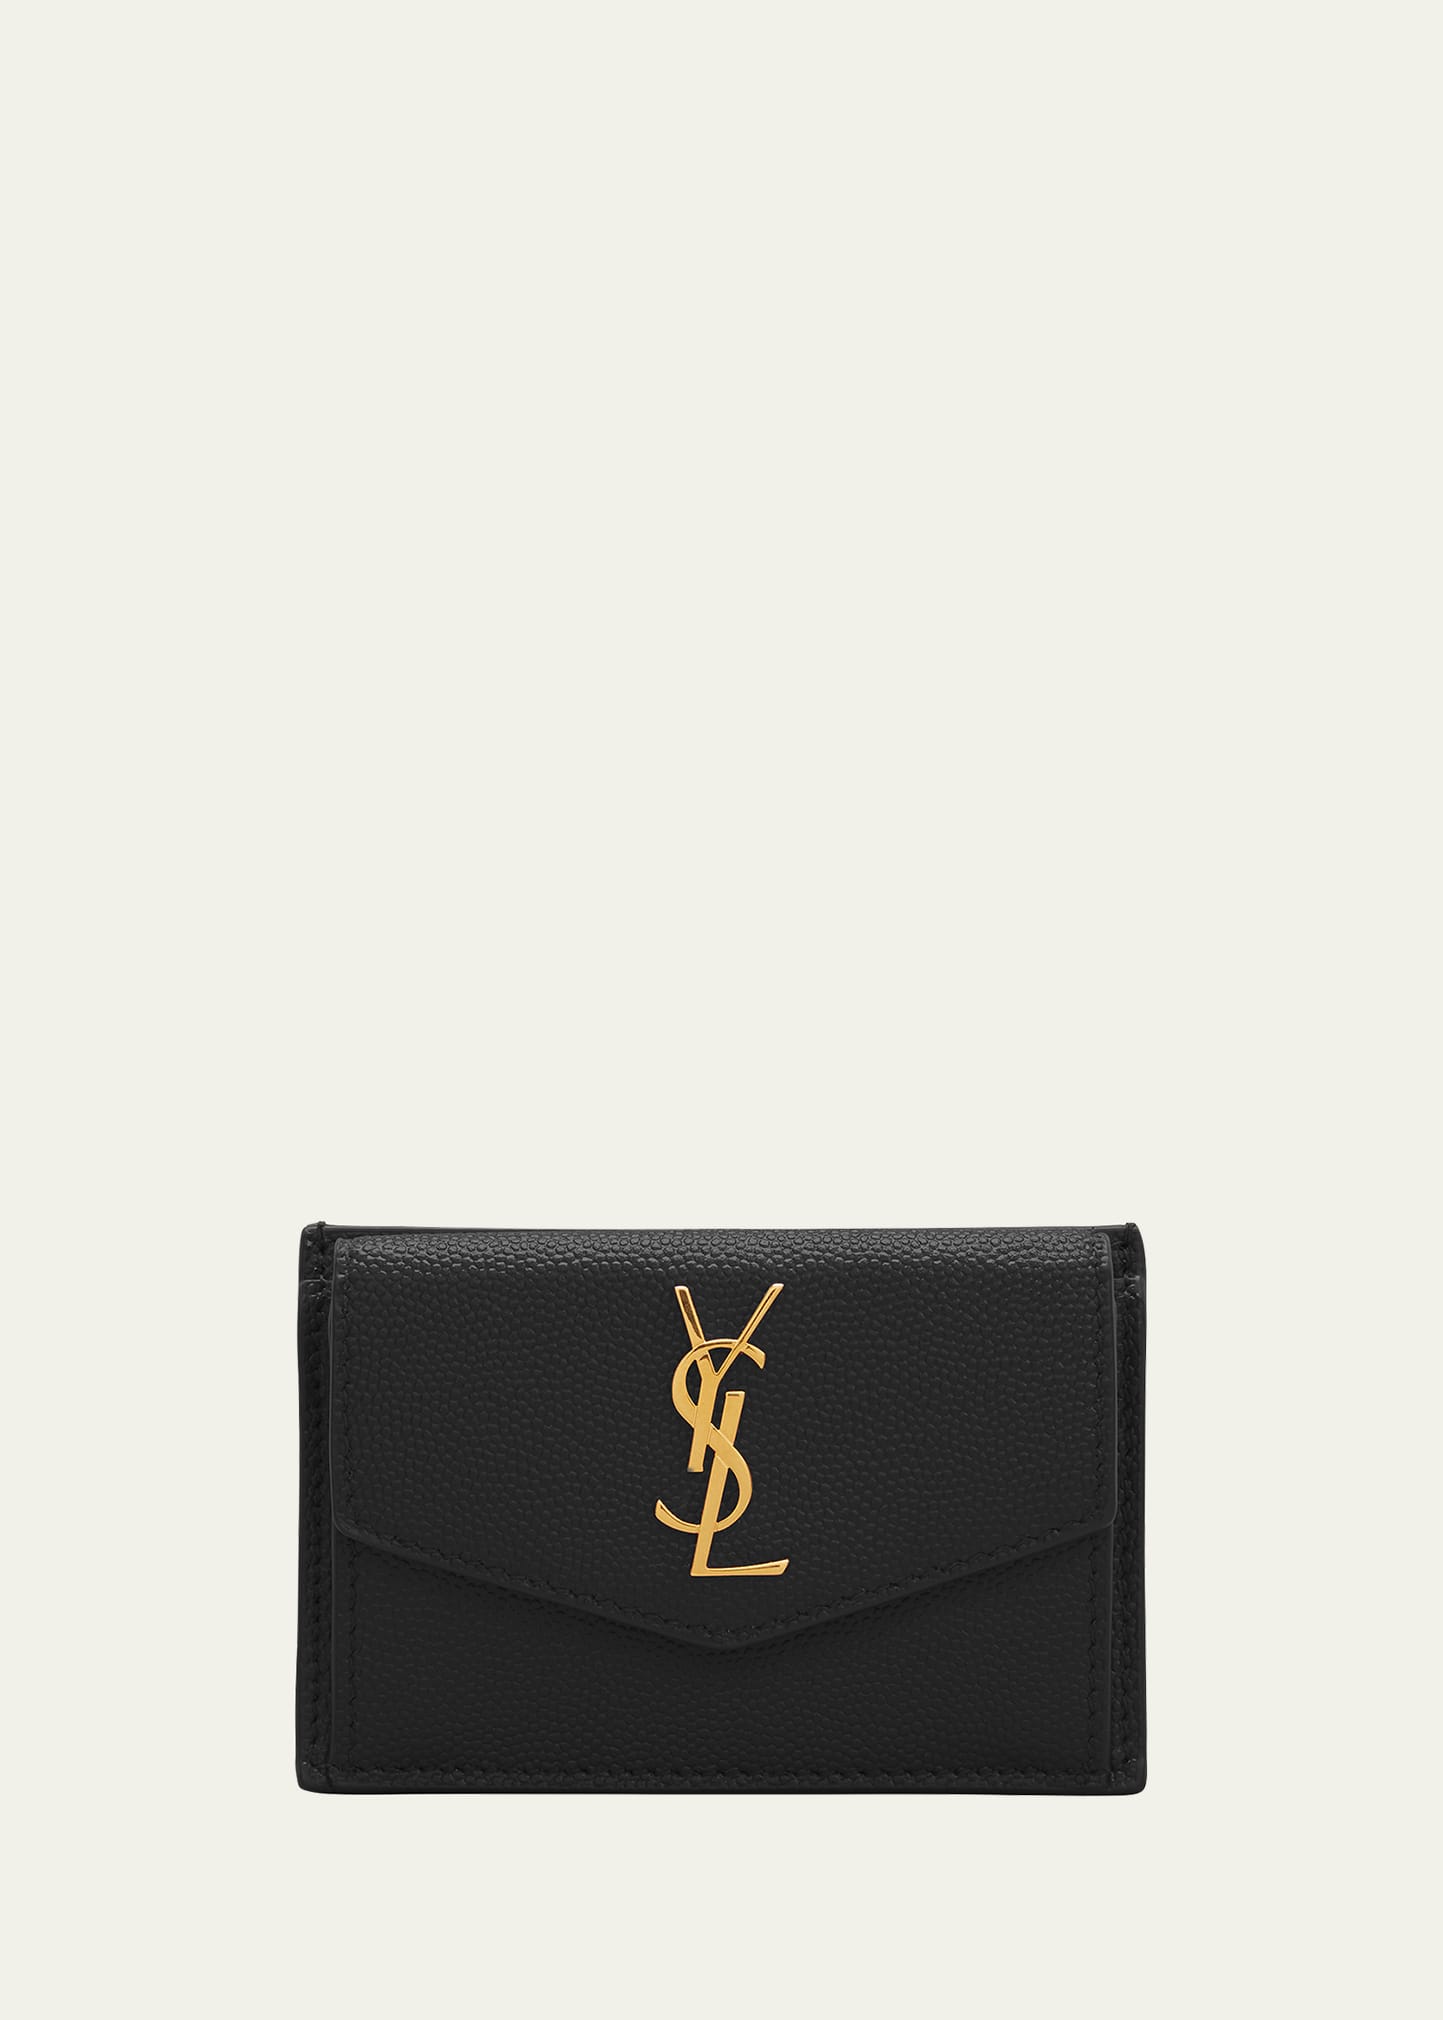 Saint Laurent Ysl Flap Top Leather Envelope Wallet In Black